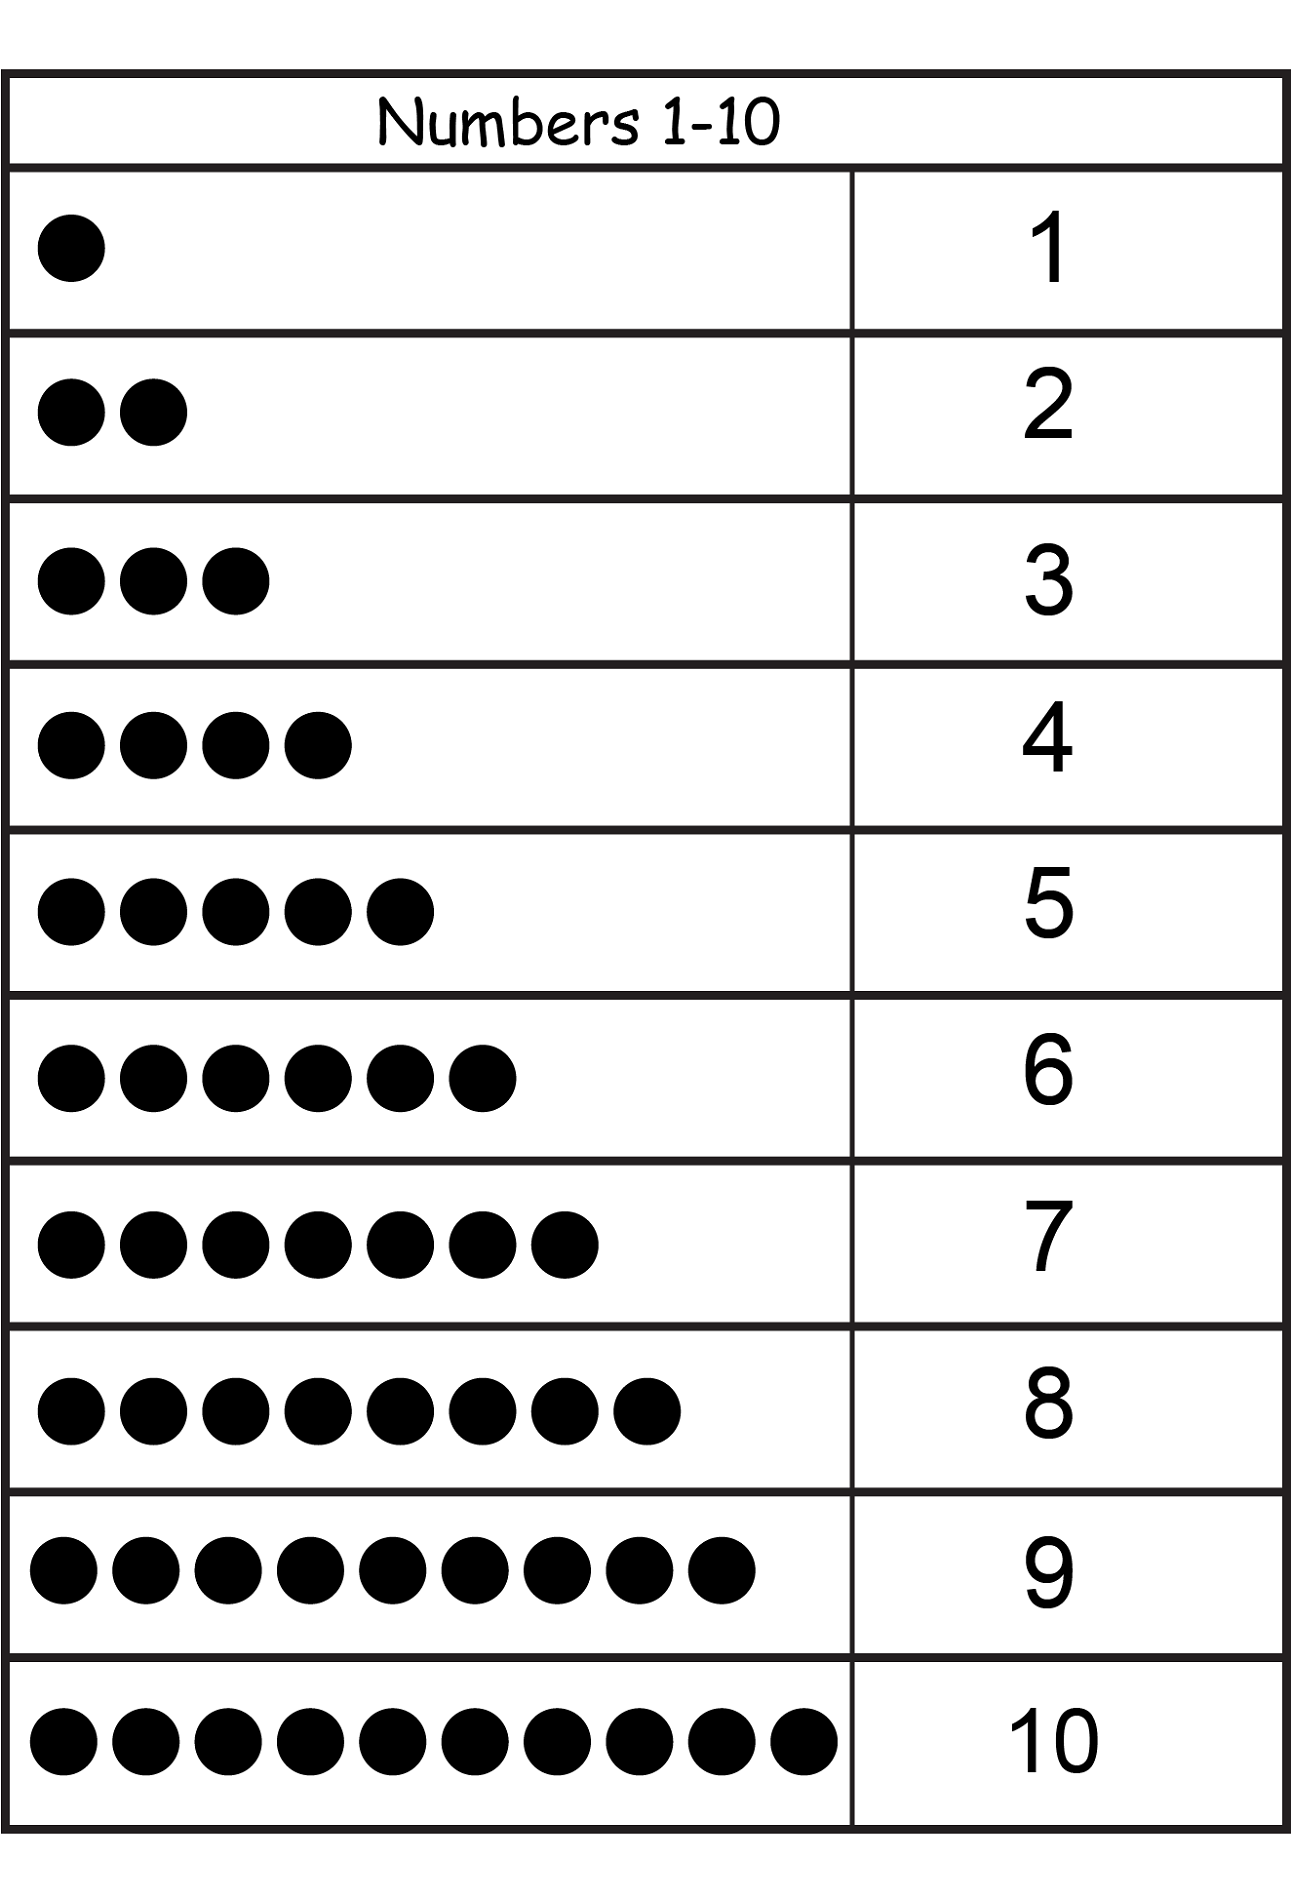 Printable number chart 1-10